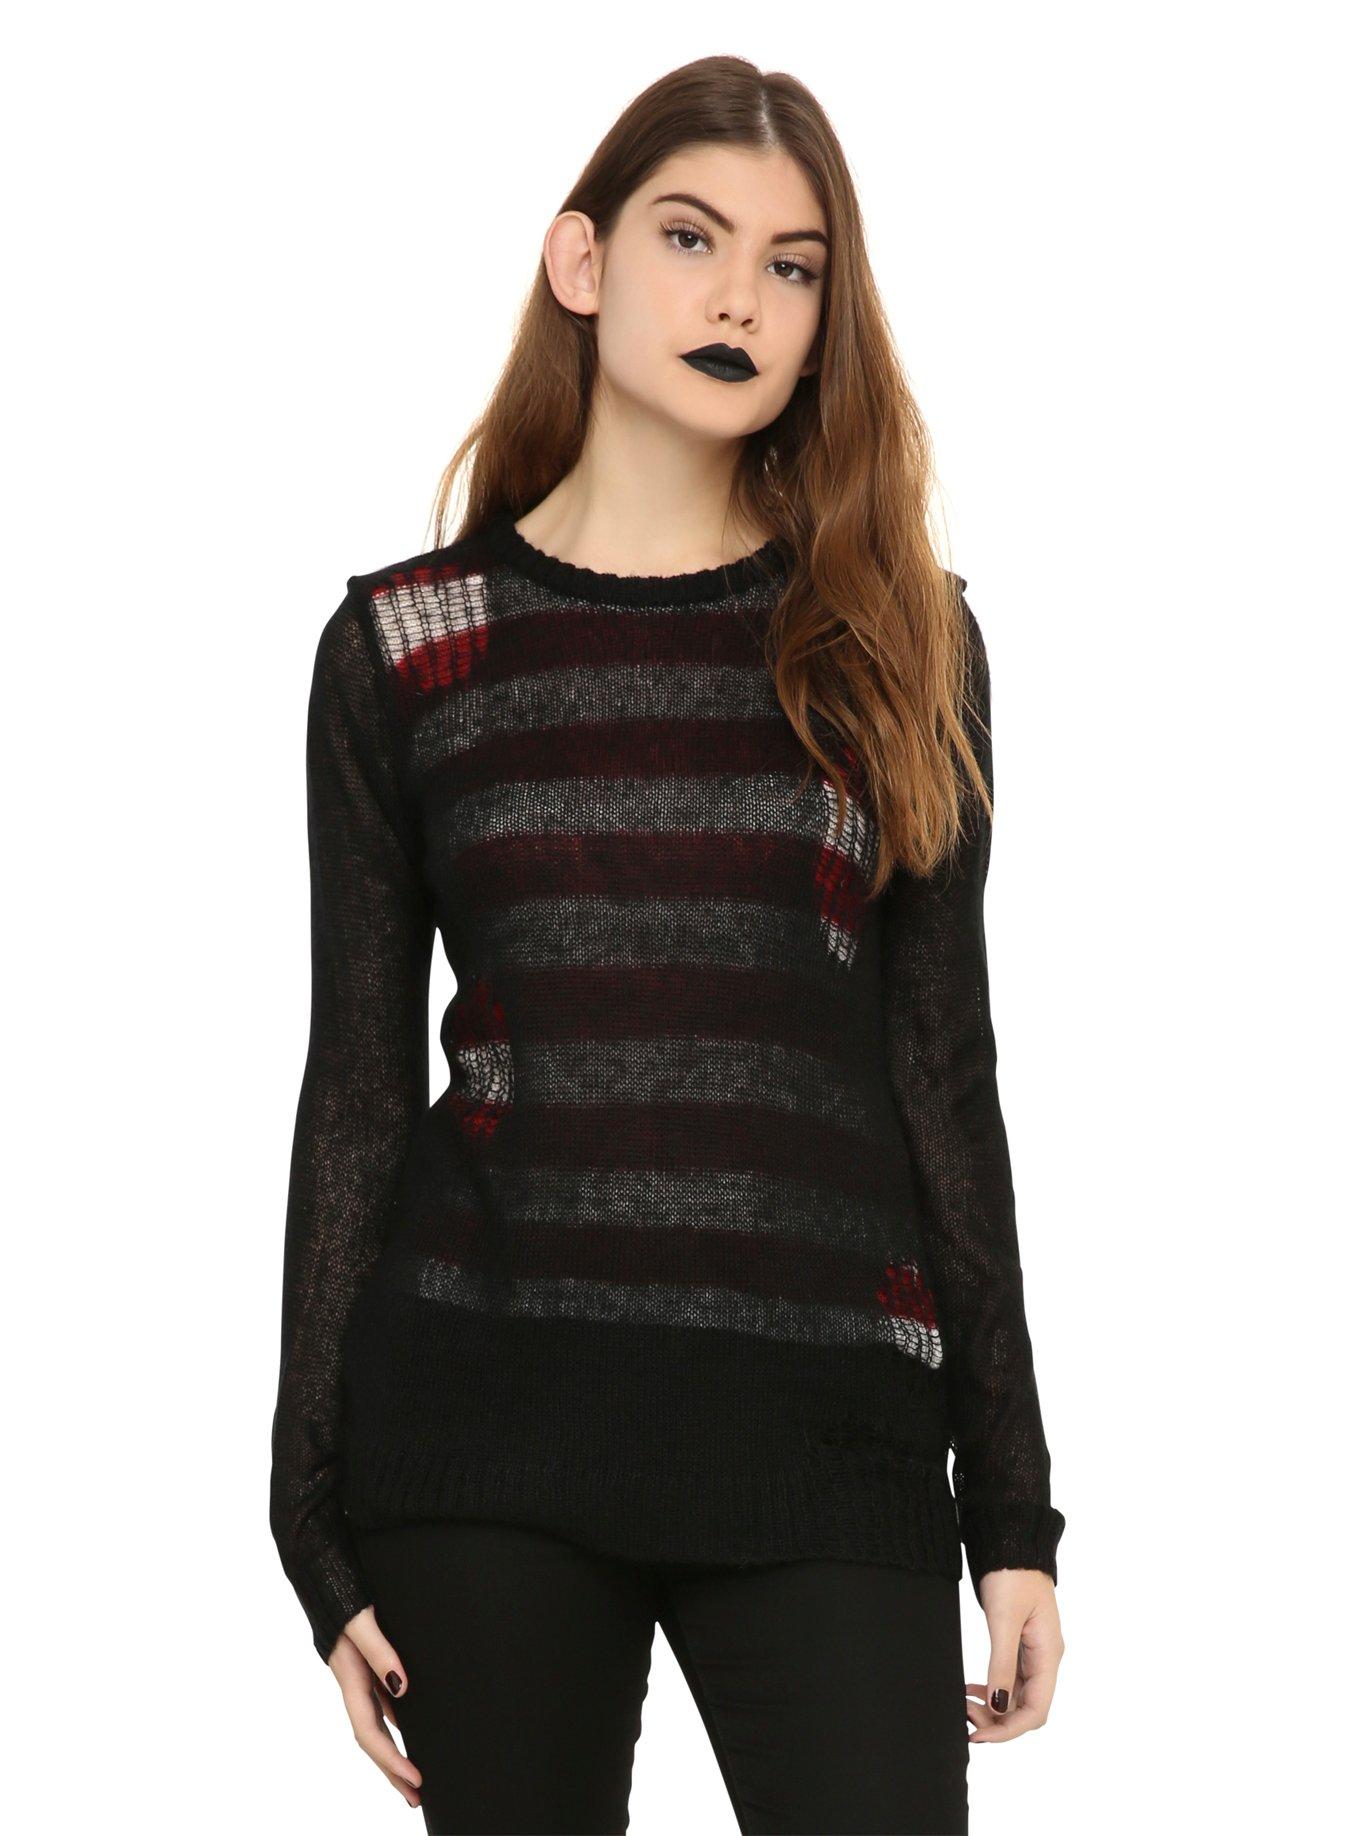 Royal Bones By Tripp Black White & Red Striped Reversible Sweater, BLACK, hi-res